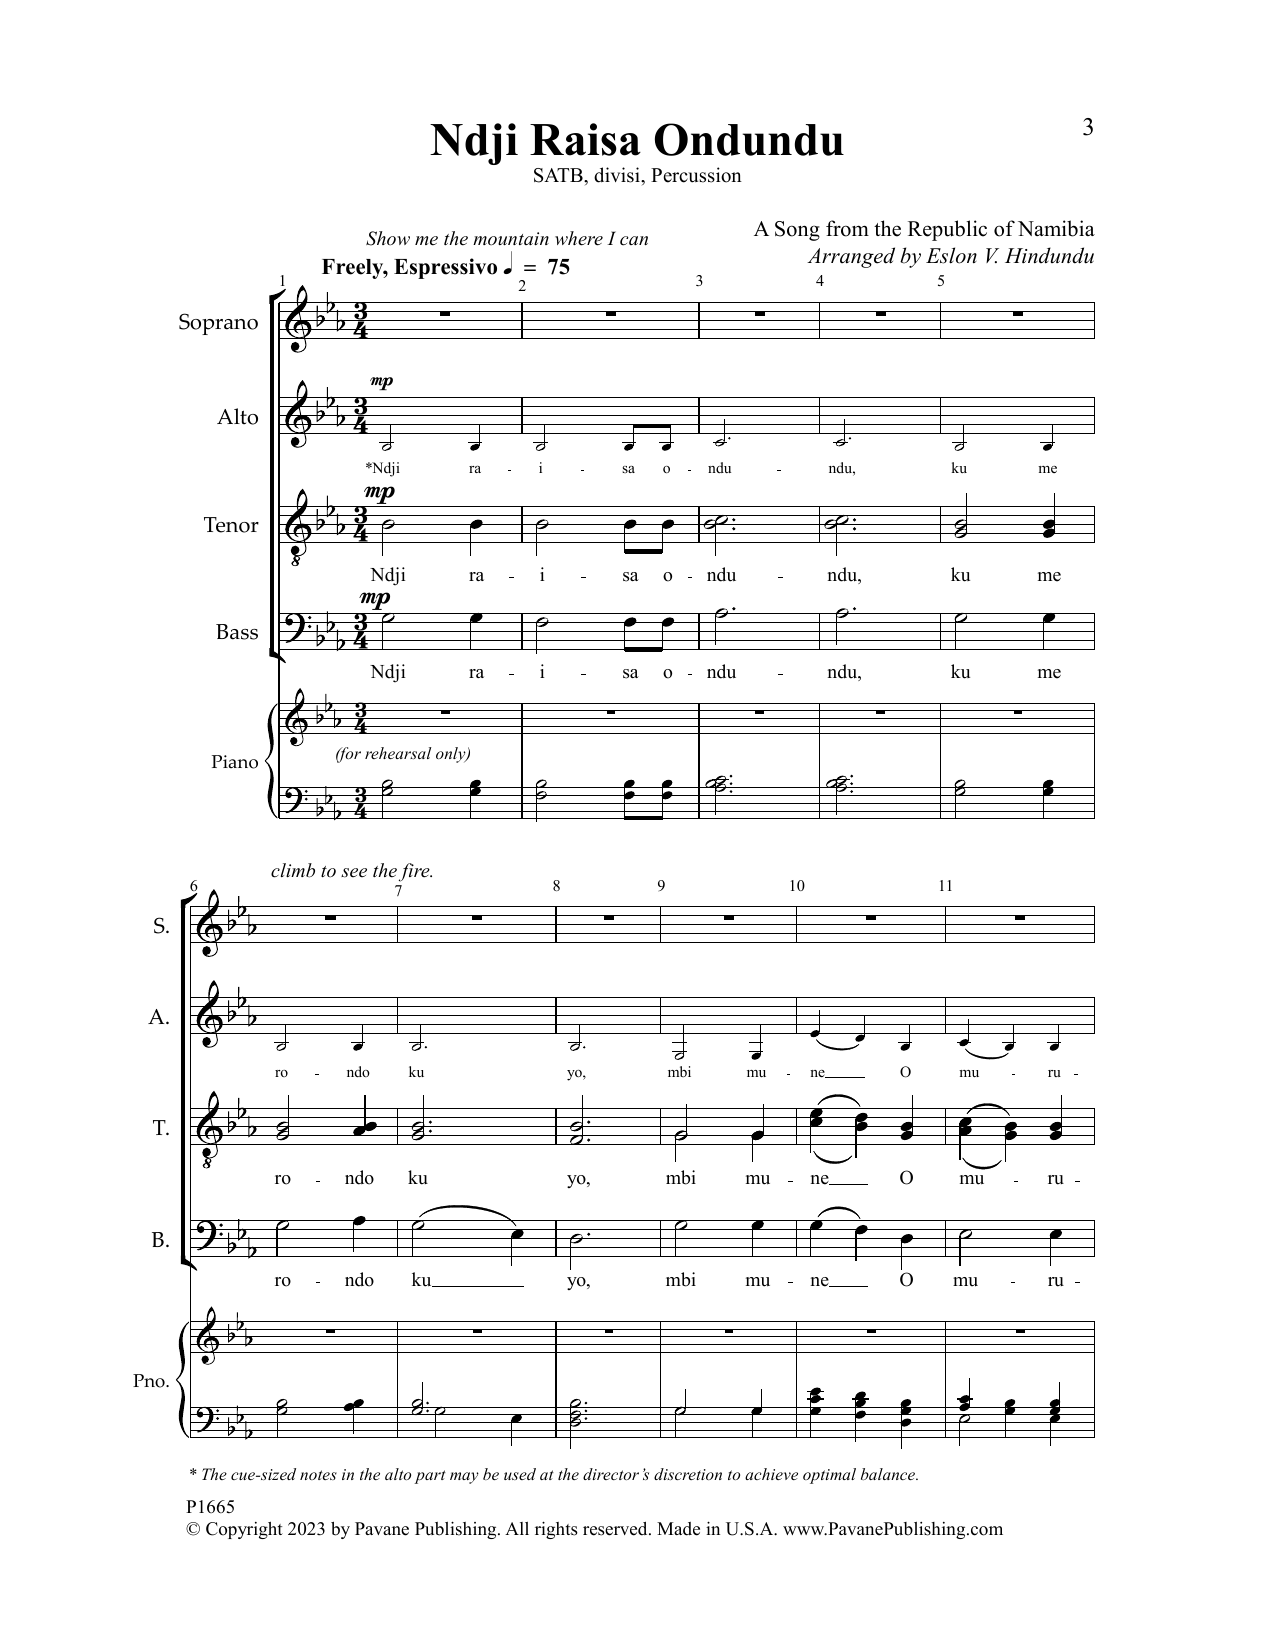 Eslon V. Hindundu Ndji Raisa Ondundu Sheet Music Notes & Chords for SATB Choir - Download or Print PDF